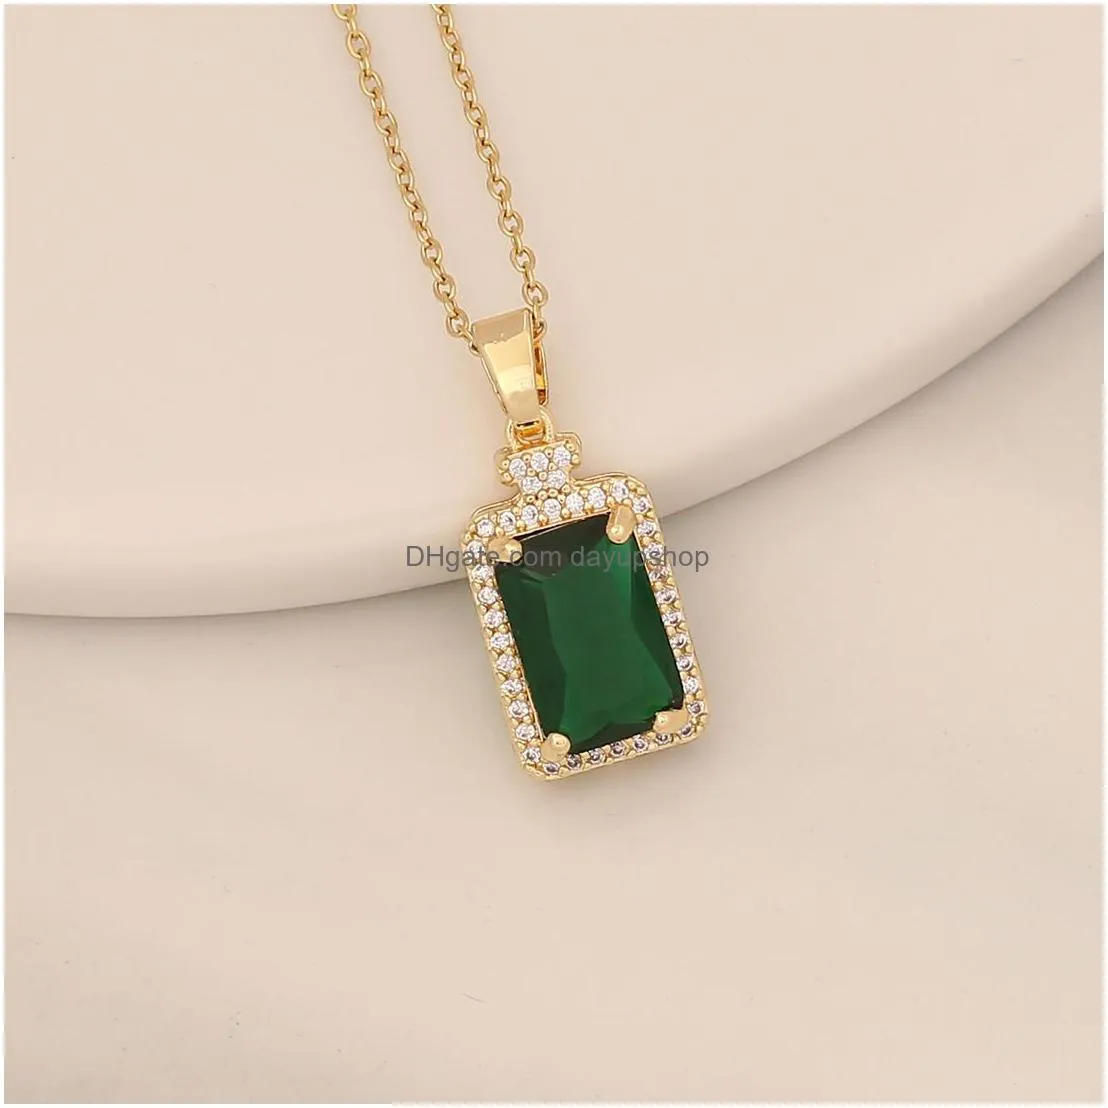 luxury emerald cross heart pendant necklace handmade jewelry for gift